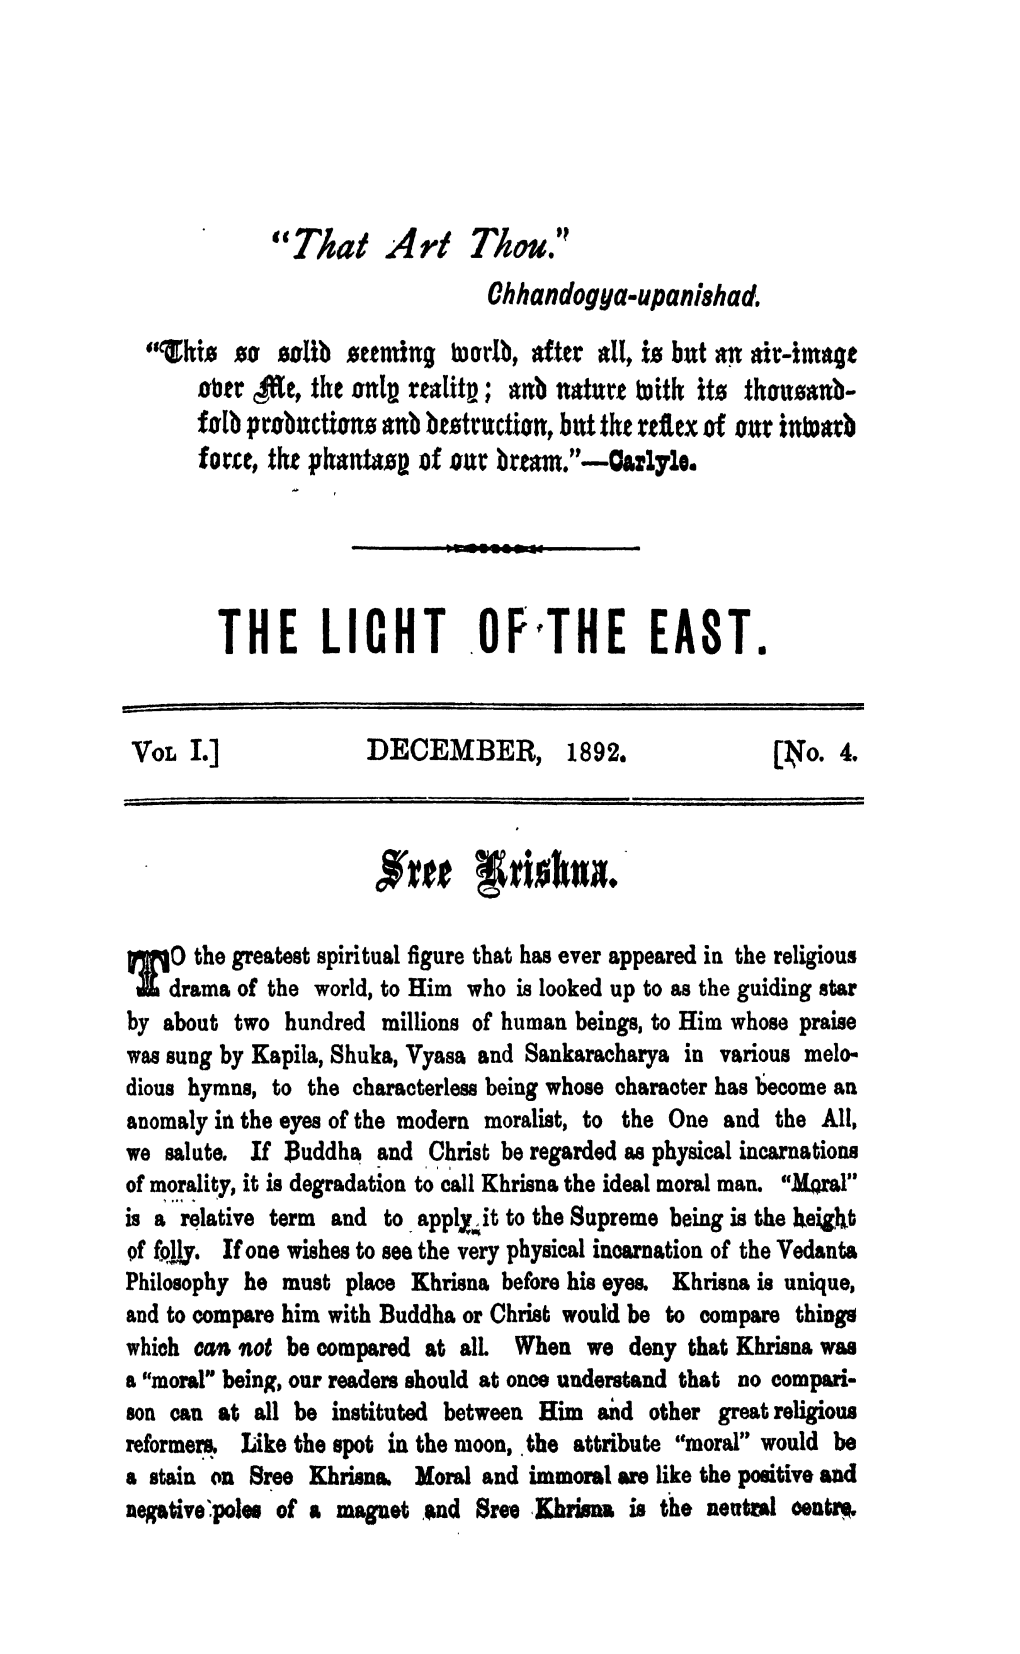 Light of the East V1 N4 Dec 1892